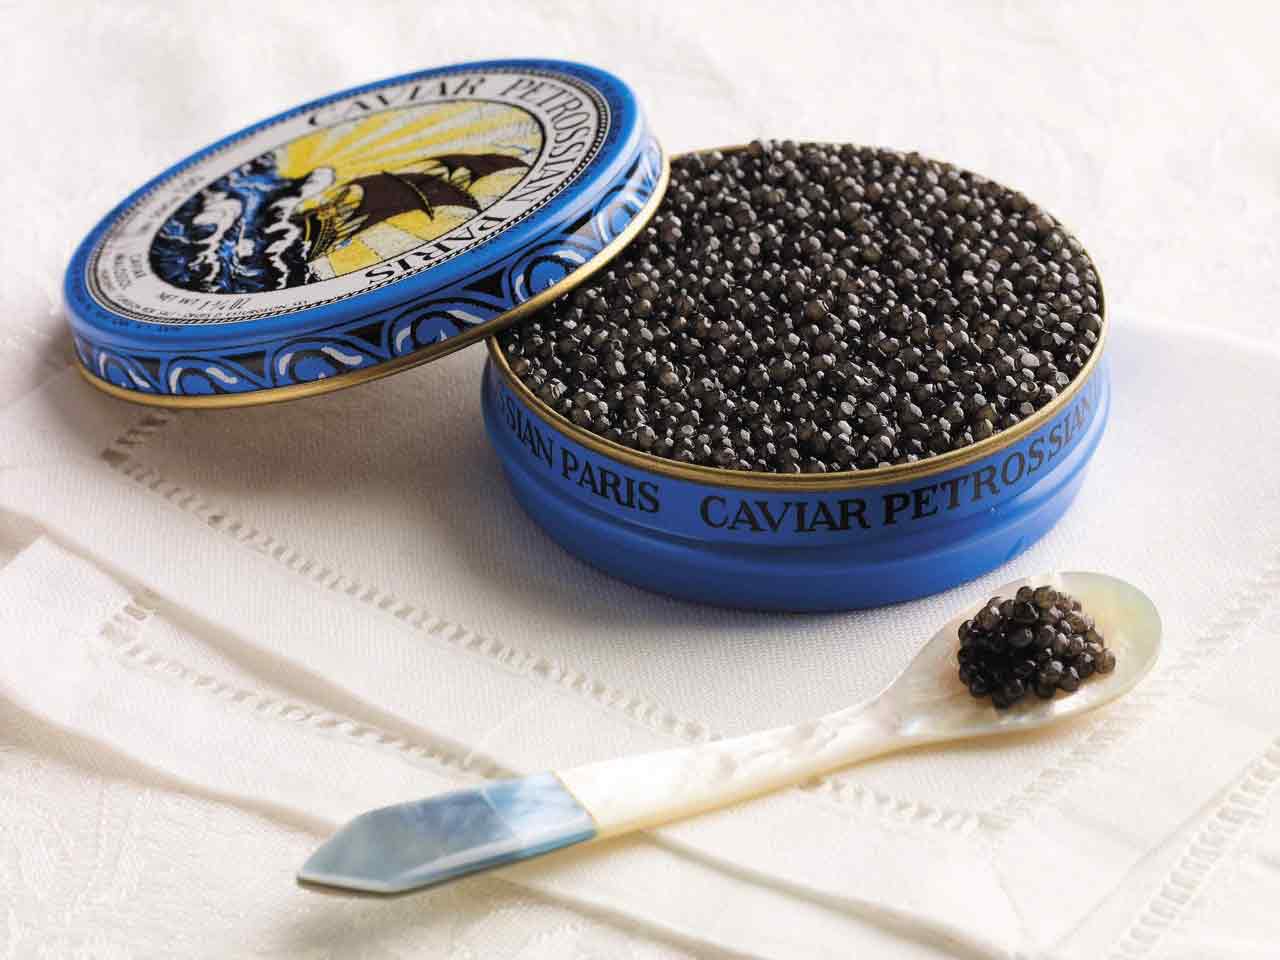 How to buy caviar